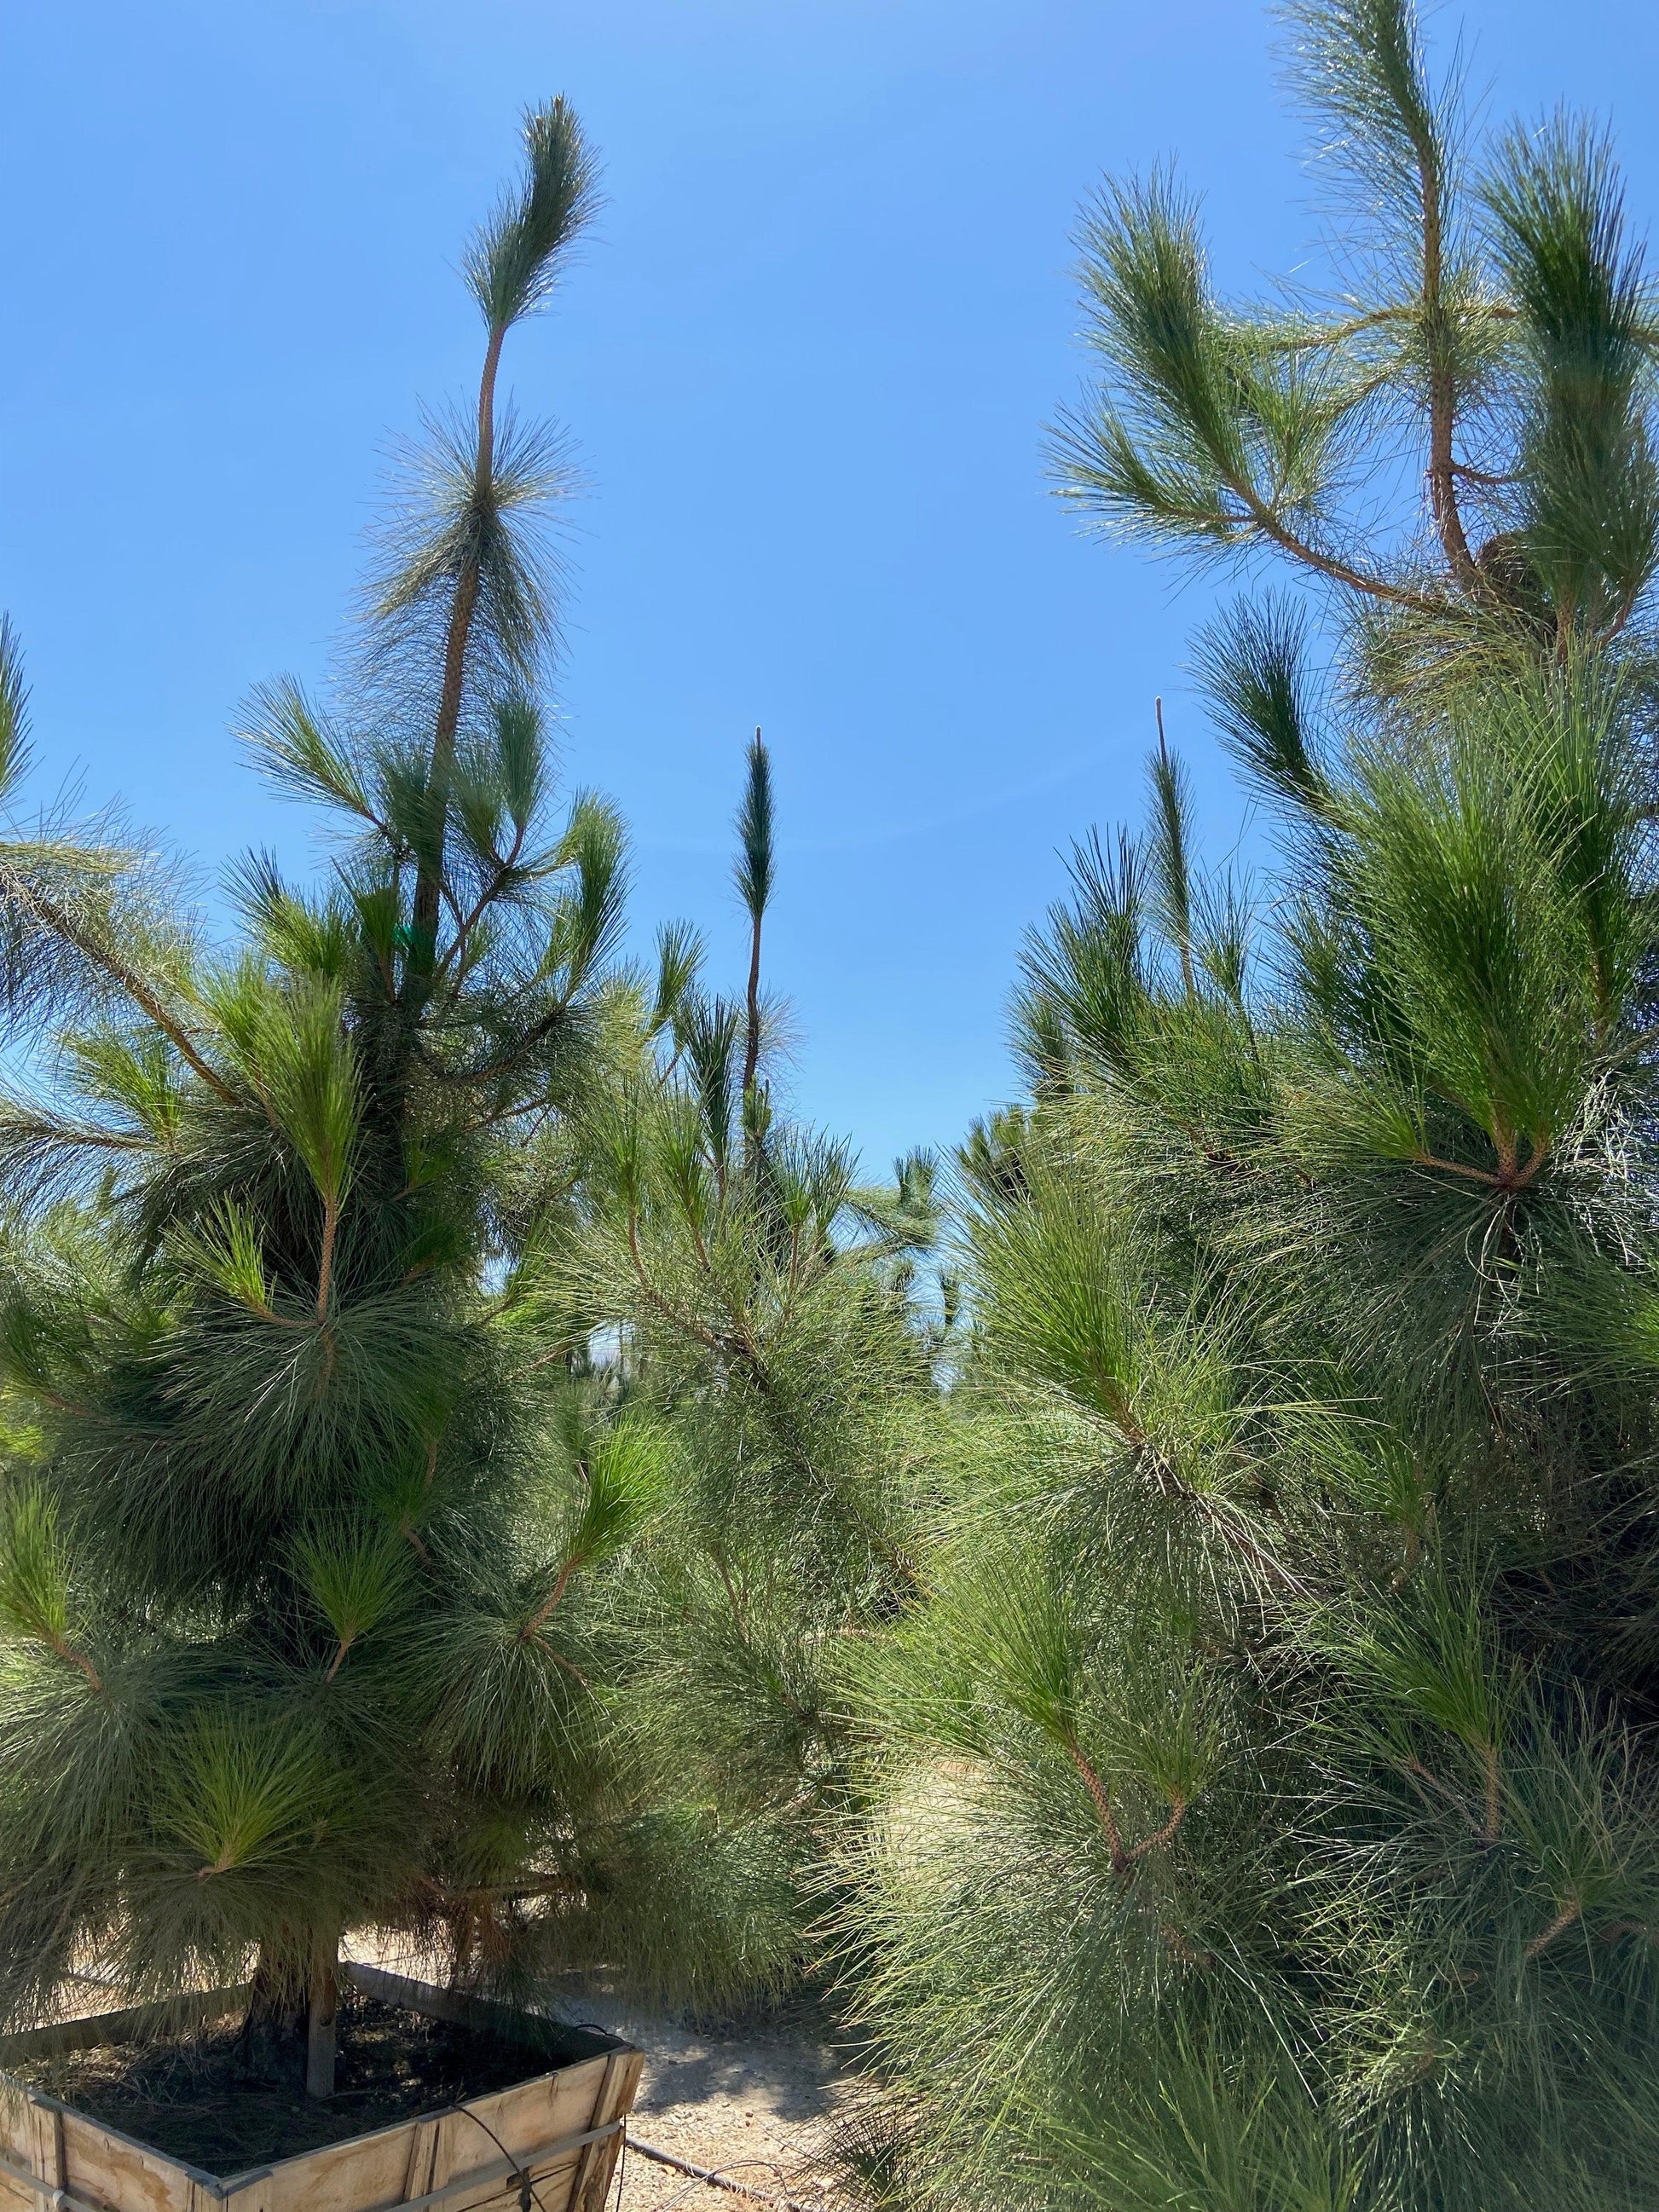 Canary Island Pine (Pinus Canariensis) - Pulled Nursery